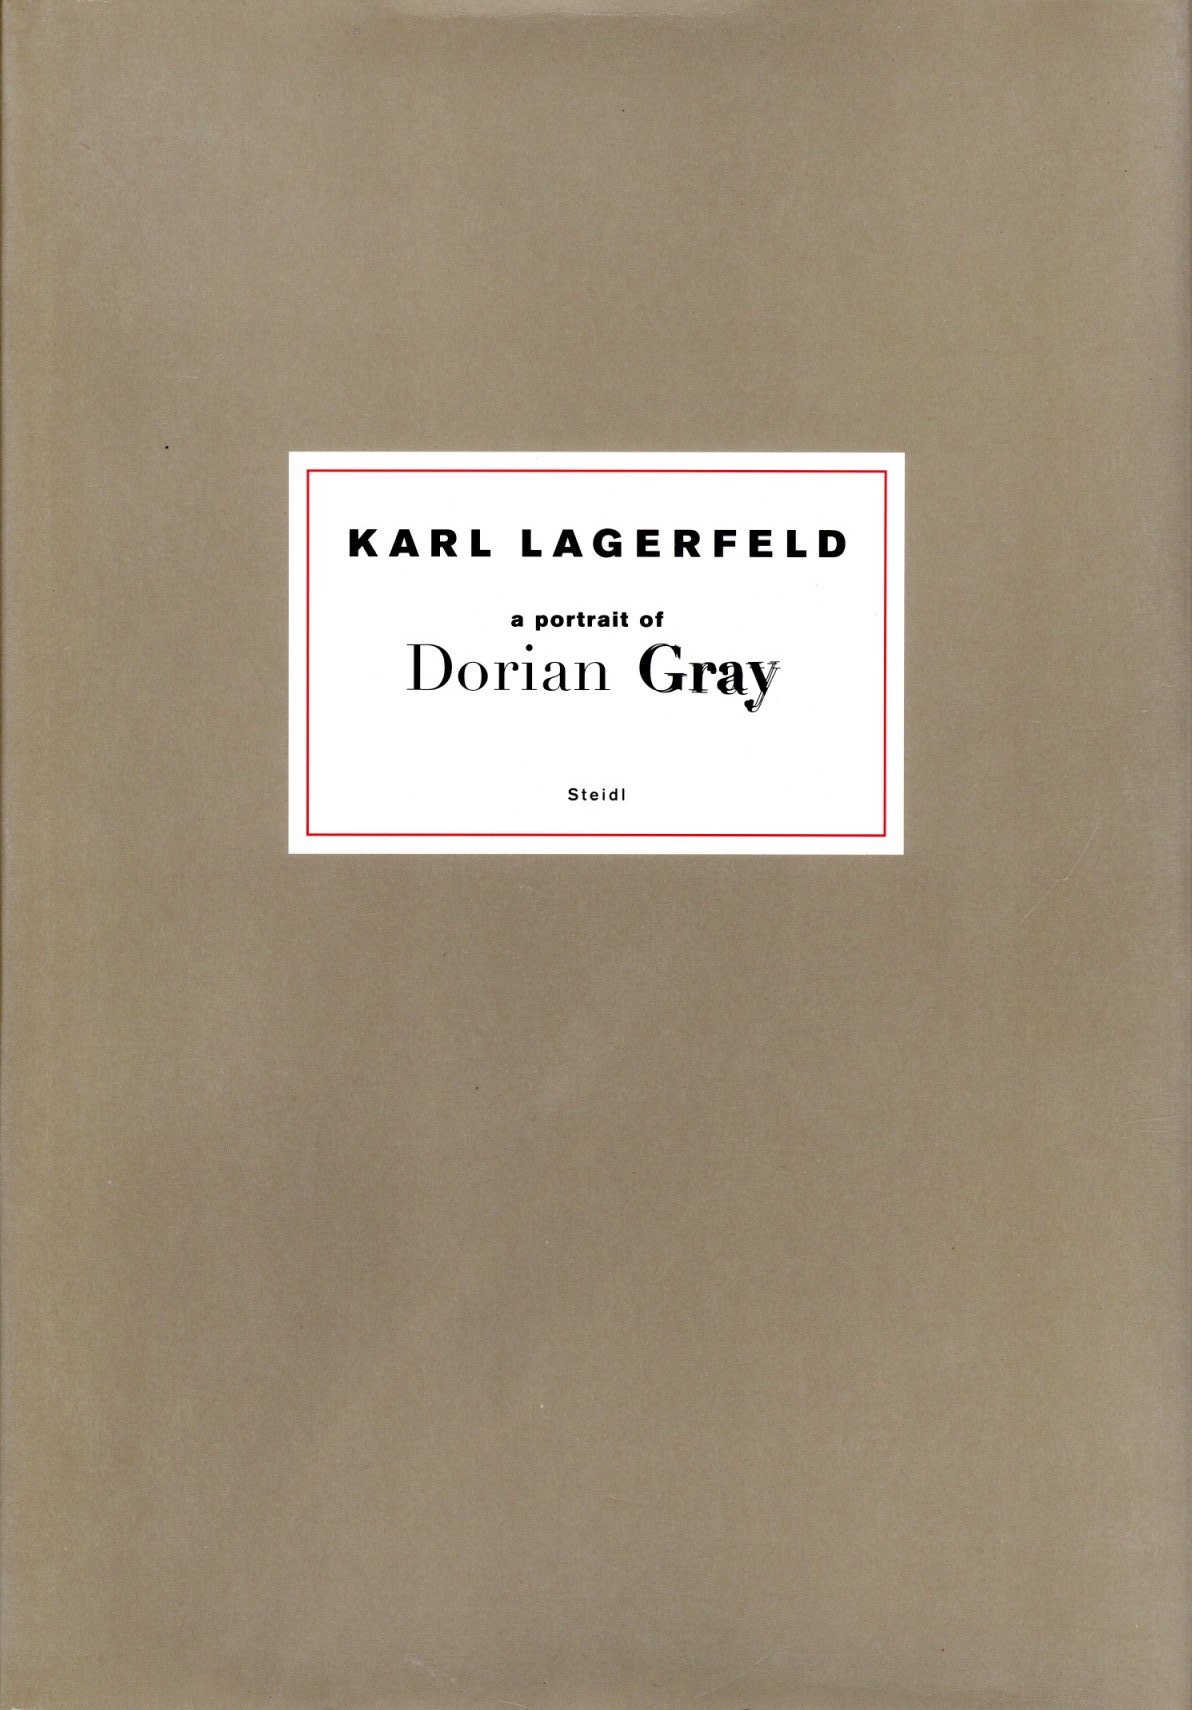 「KARL LAGERFELD a portrait of Dorian Gray / Photo:  Karl Lagerfeld」メイン画像